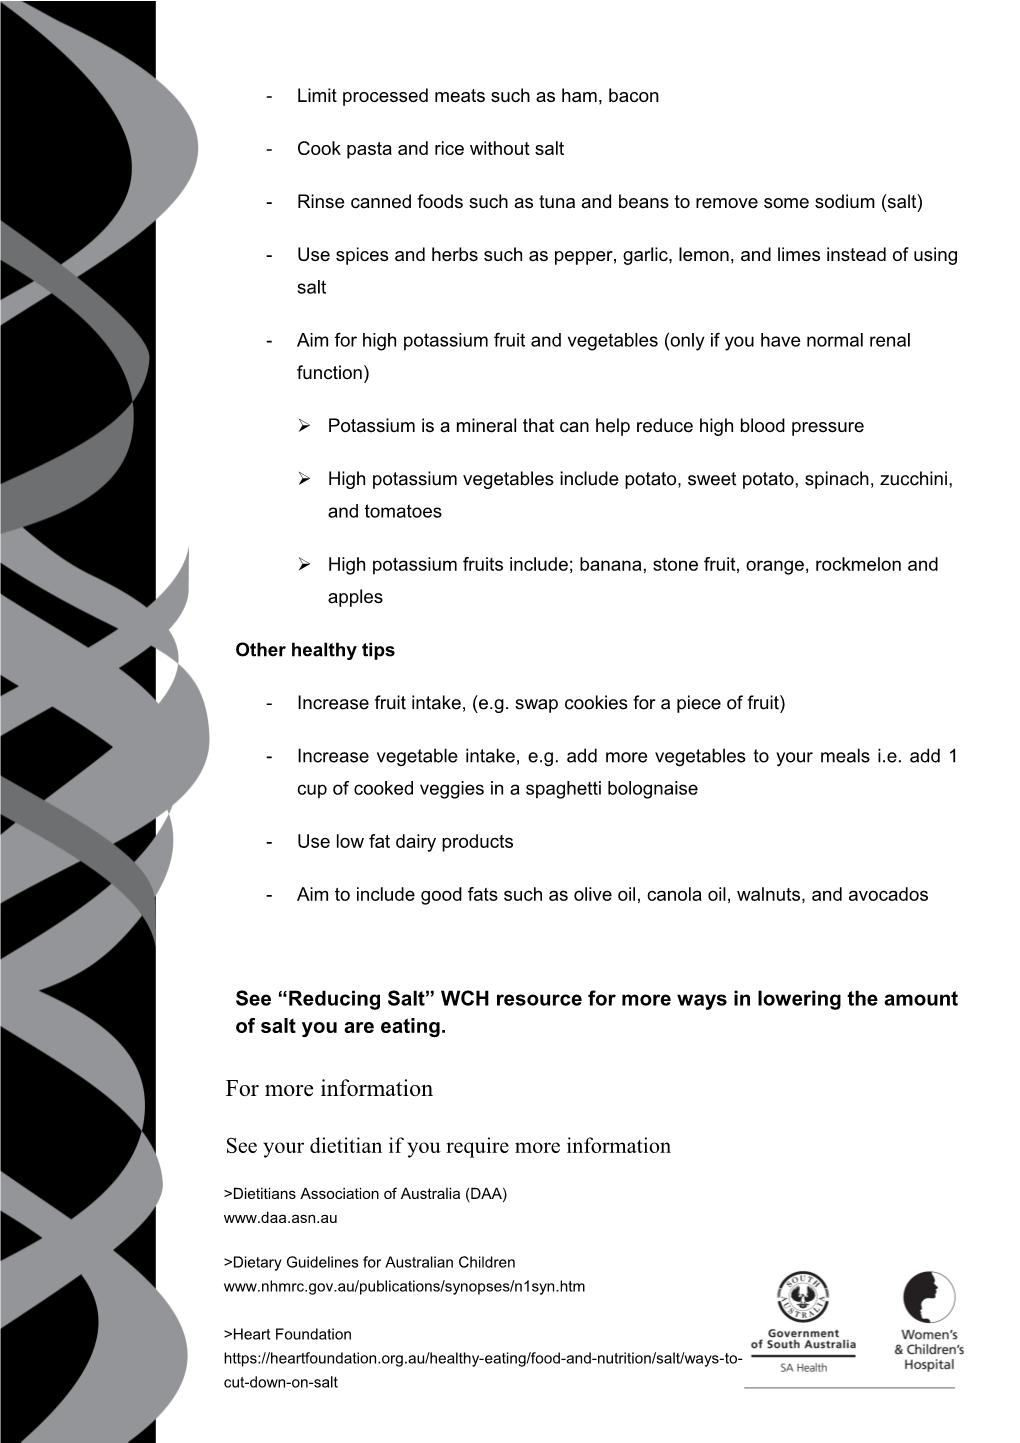 Women's & Children's Hospital Fact Sheet Template - Black - Double Page - Single Column